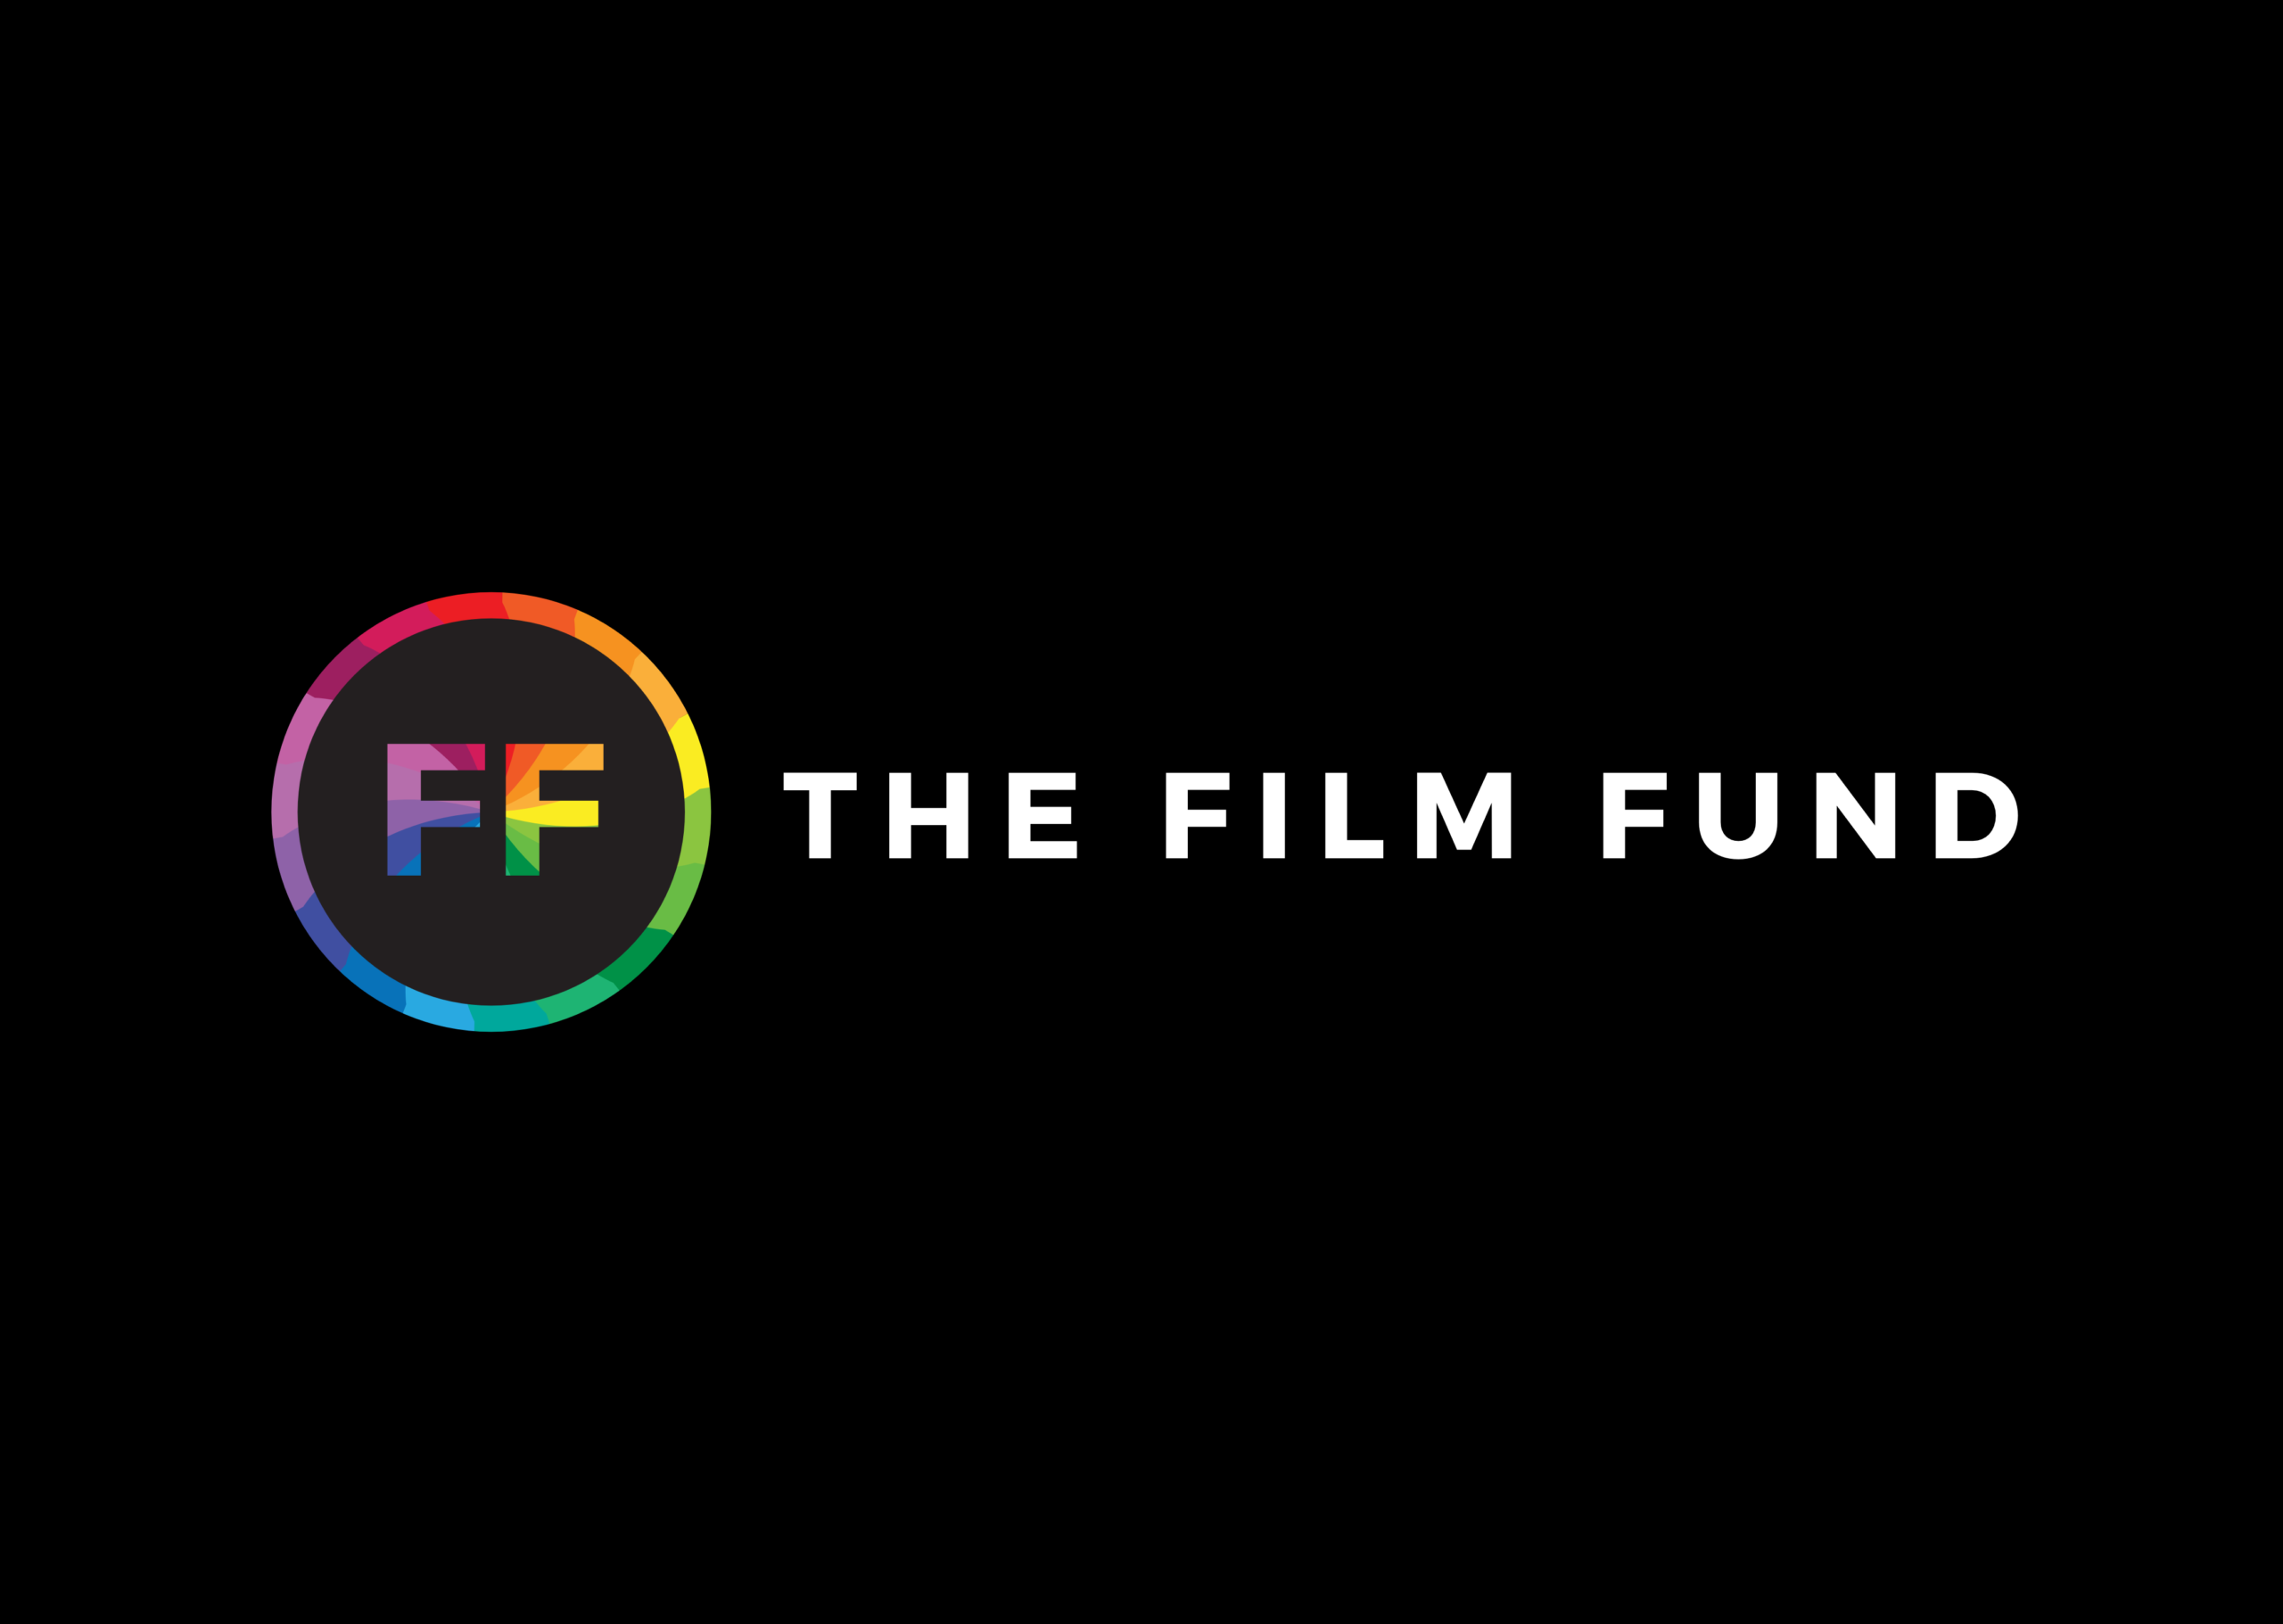 the film fund logo black background